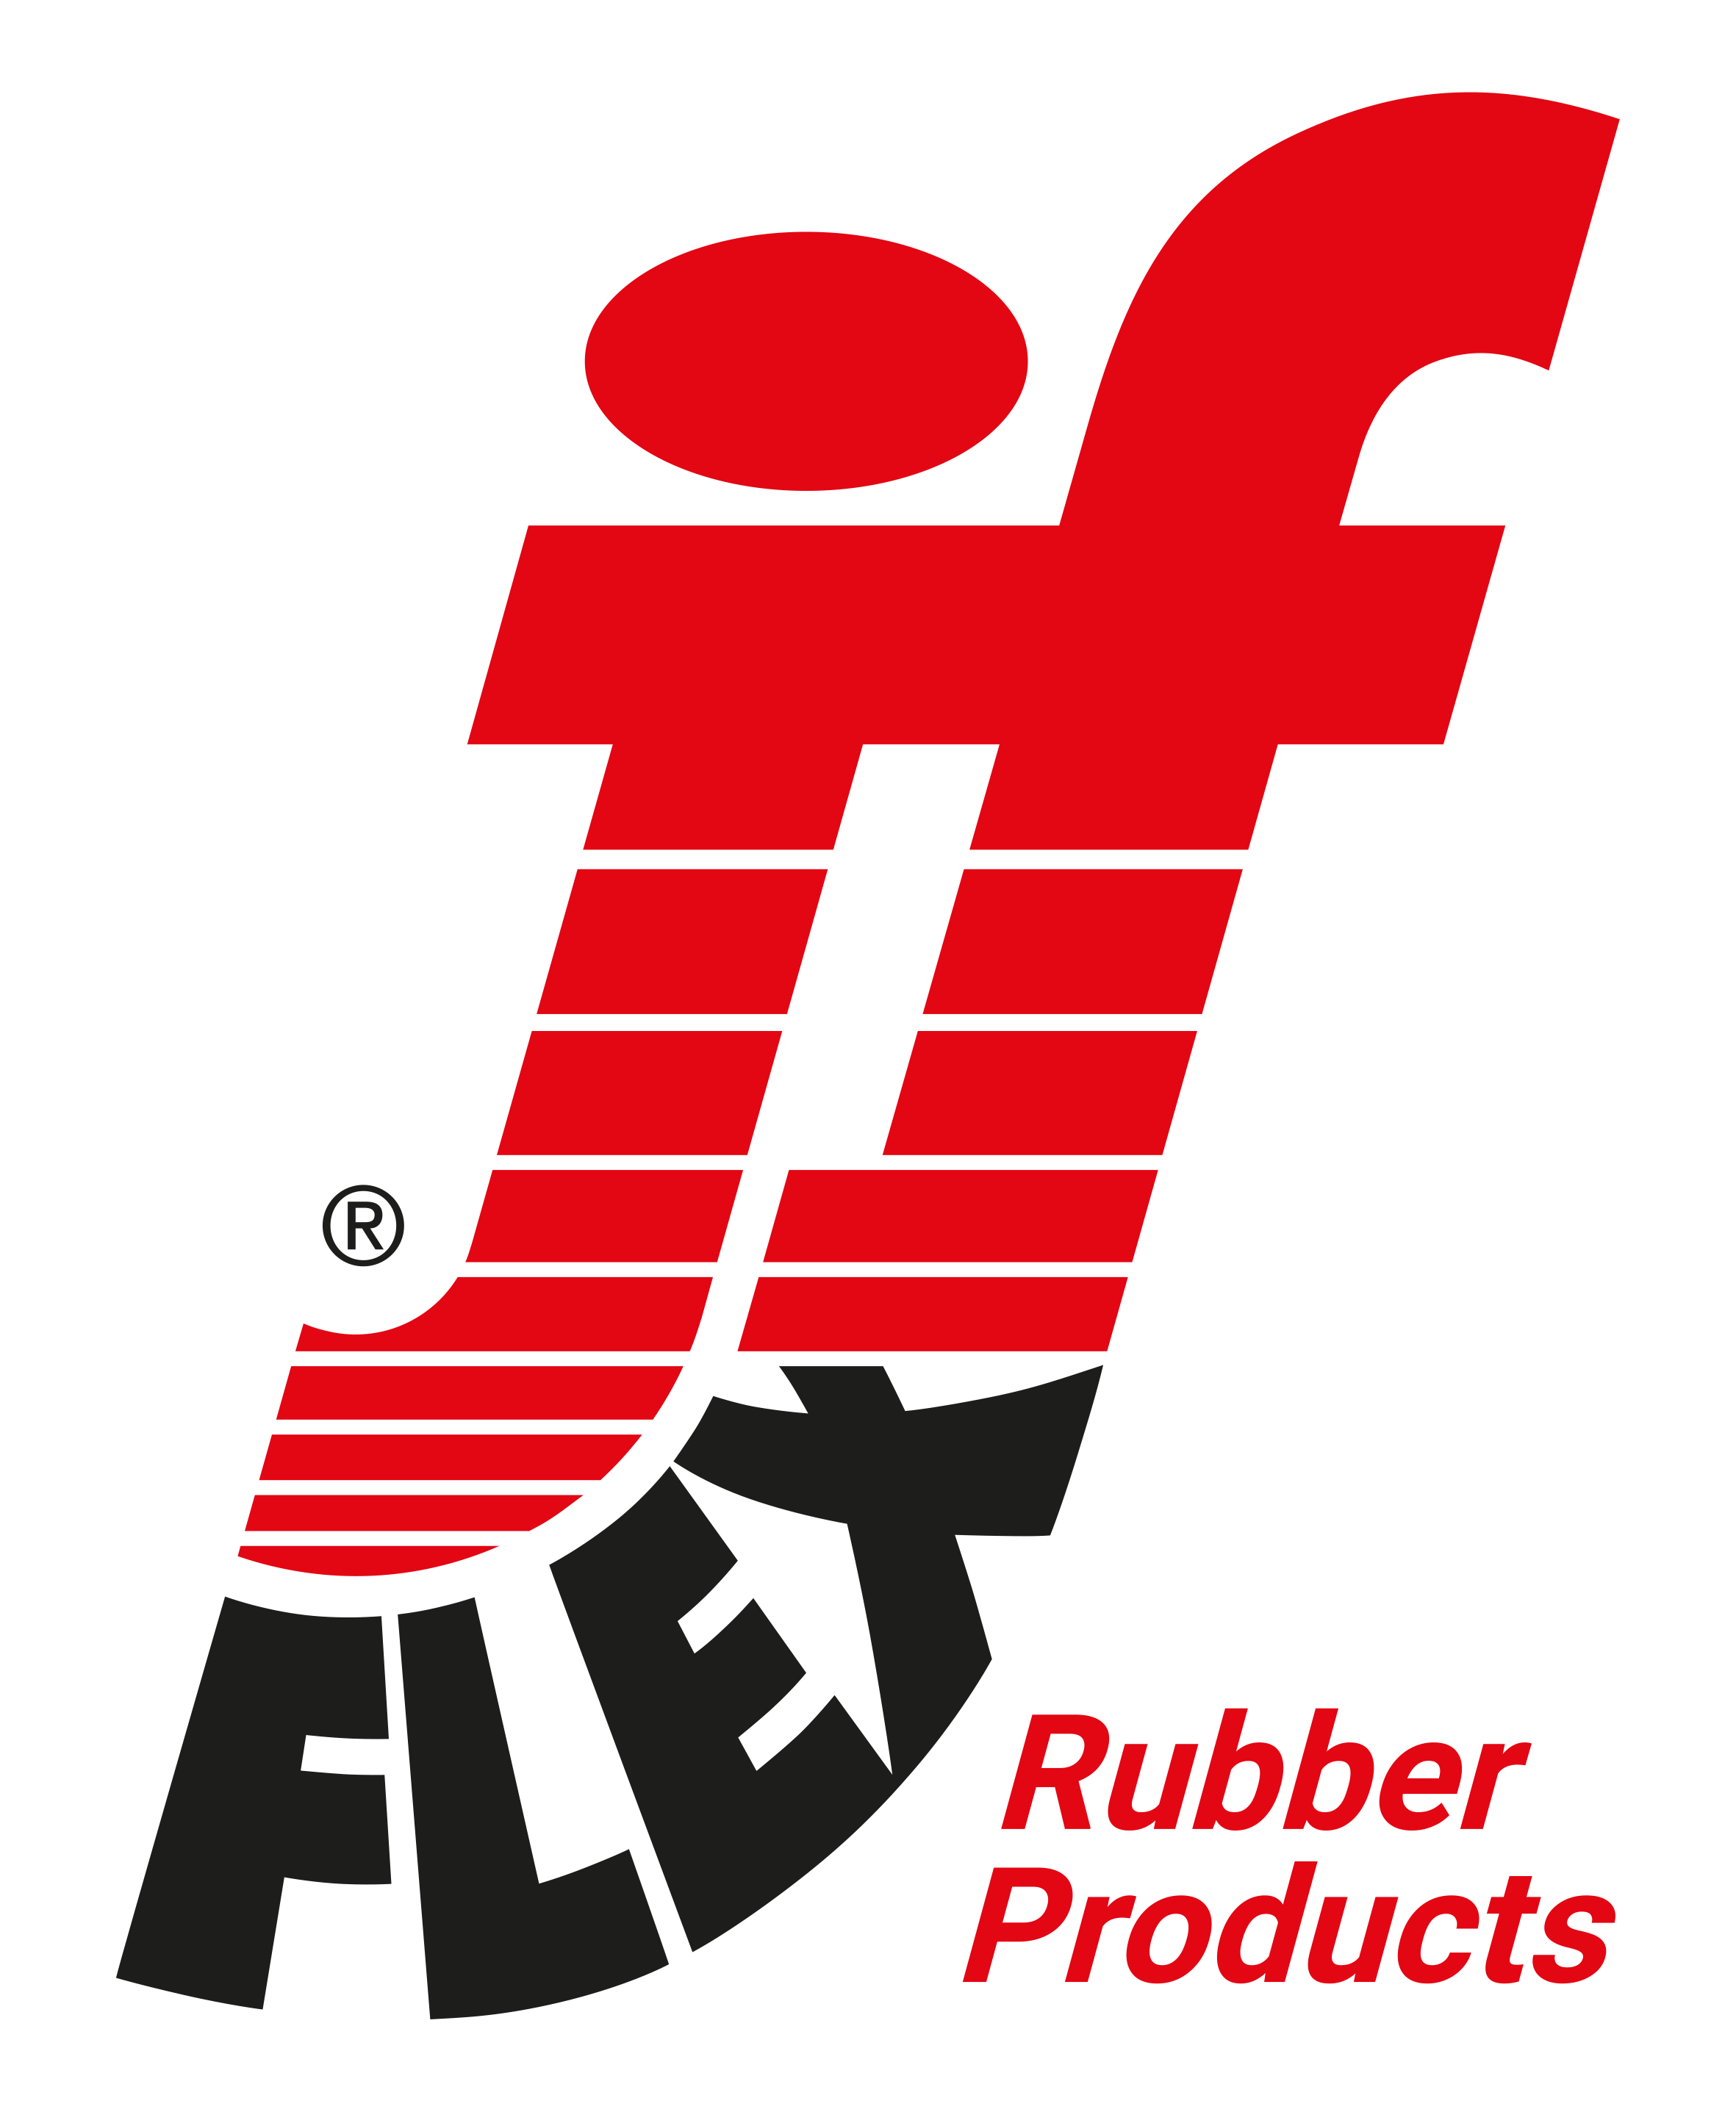 J-Flex Rubber Products